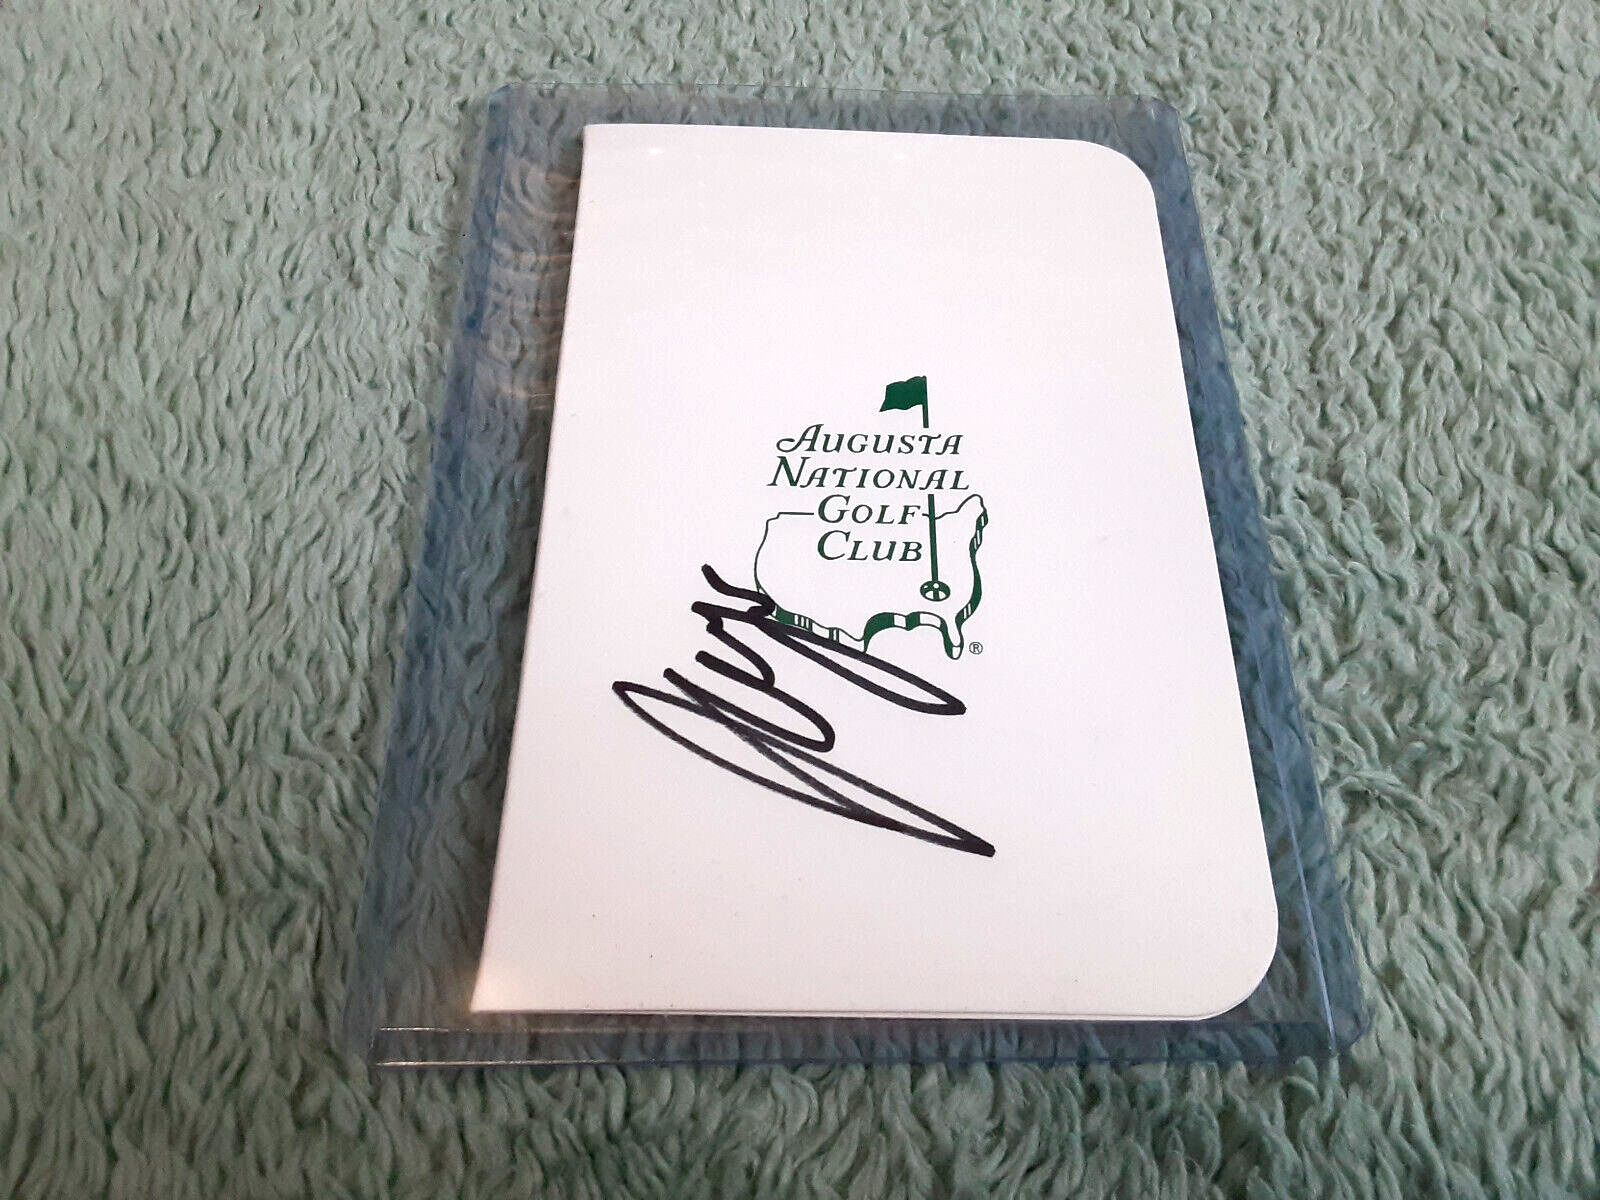 2017 Masters Champion Sergio Garcia Autographed Signed Masters ScoreCard W/COA